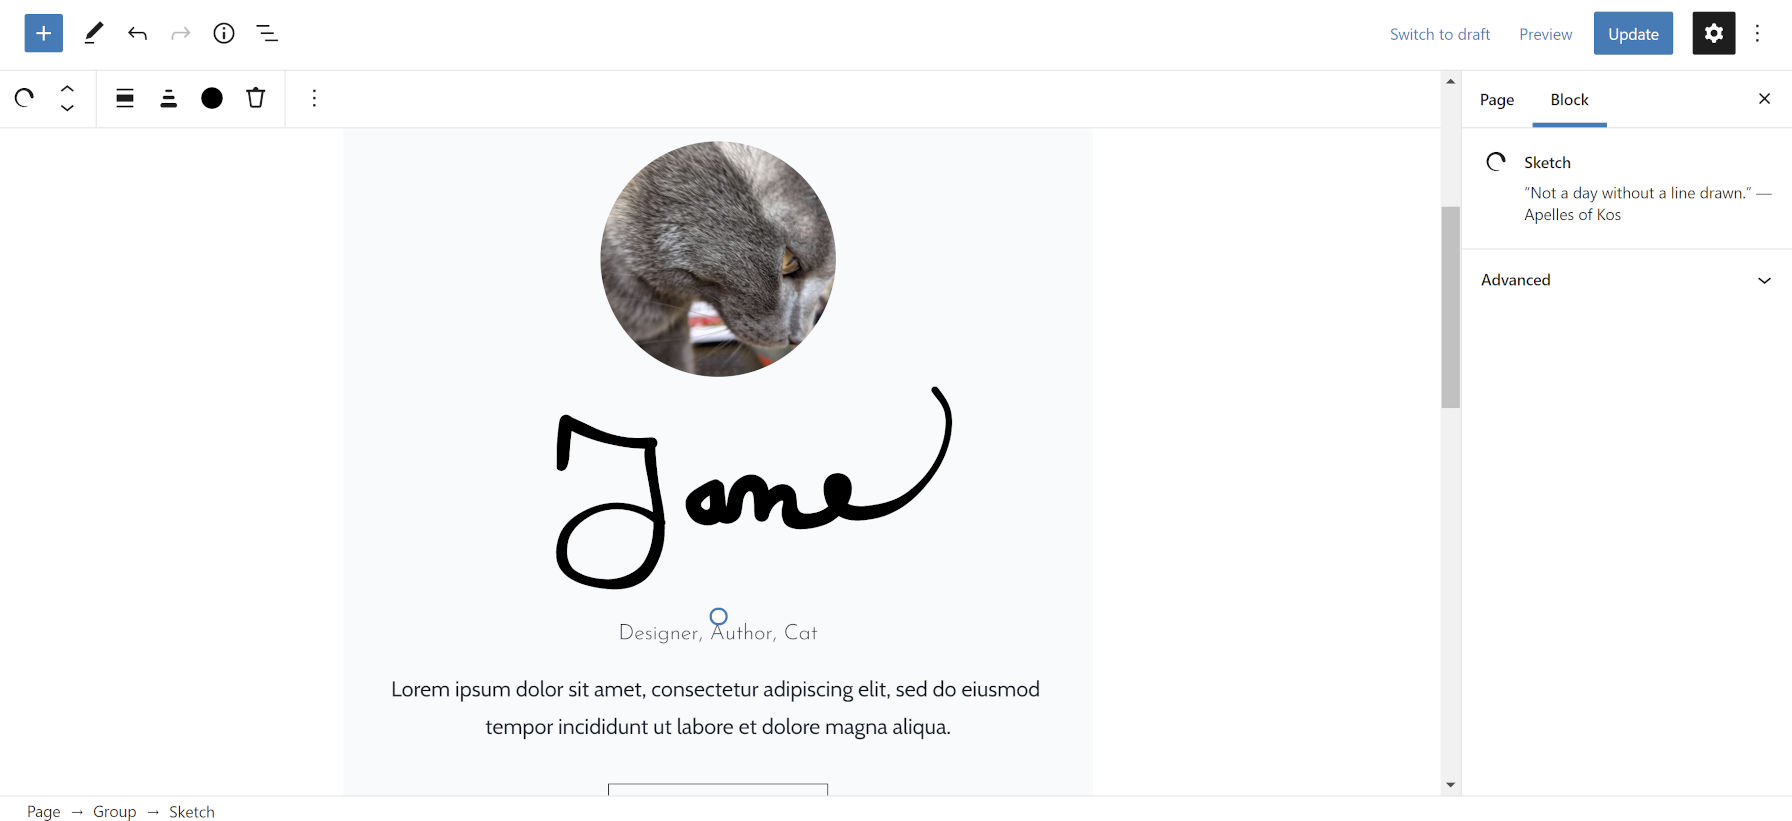 Profile card in the WordPress editor, signature written beneath the profile photo.